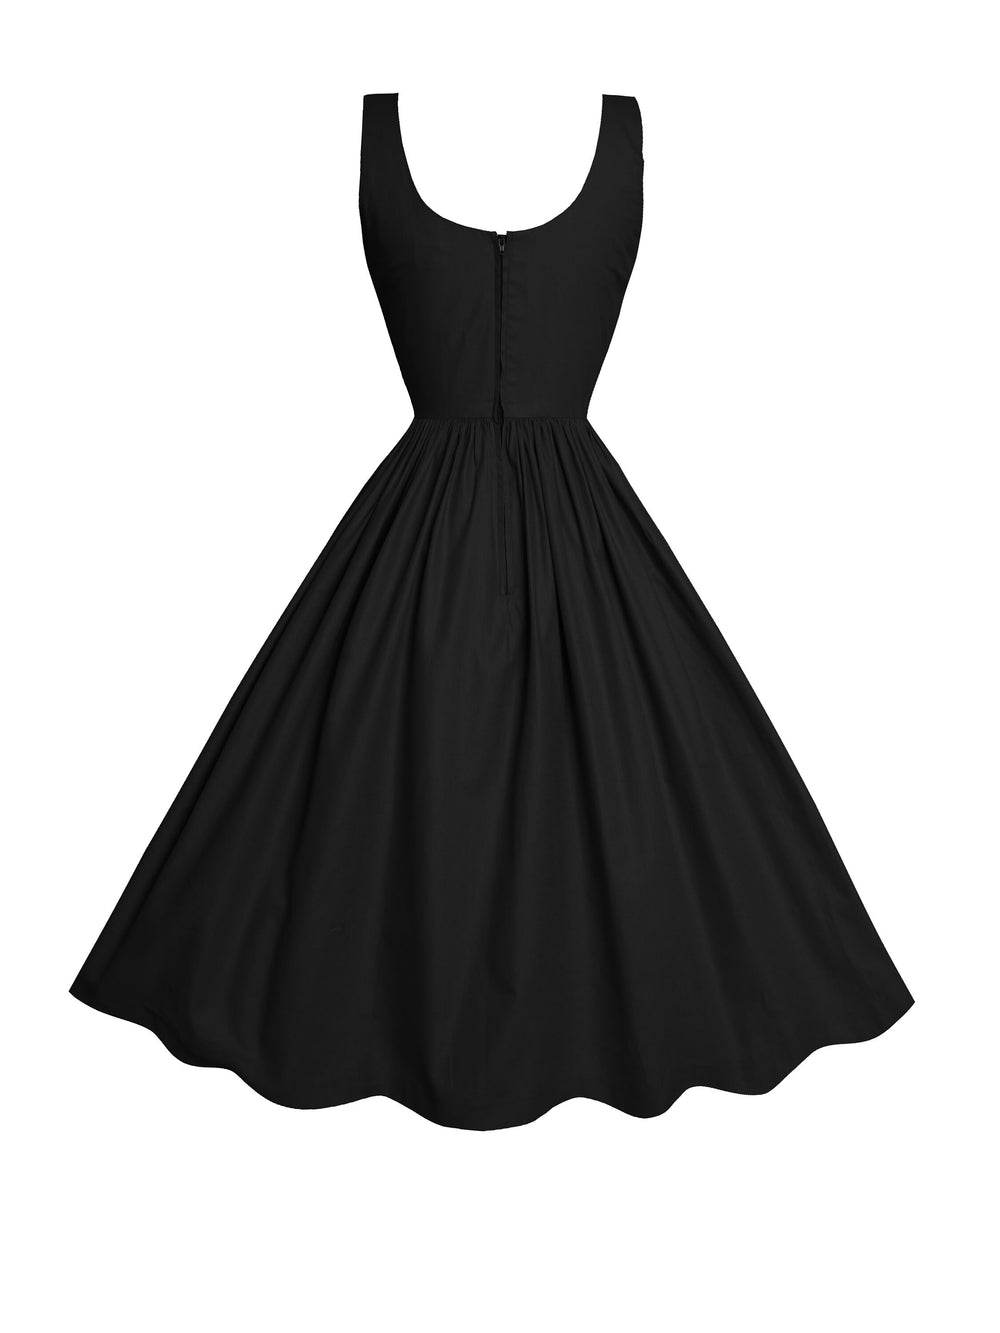 RTS - Size S - Emily Dress in Raven Black Cotton